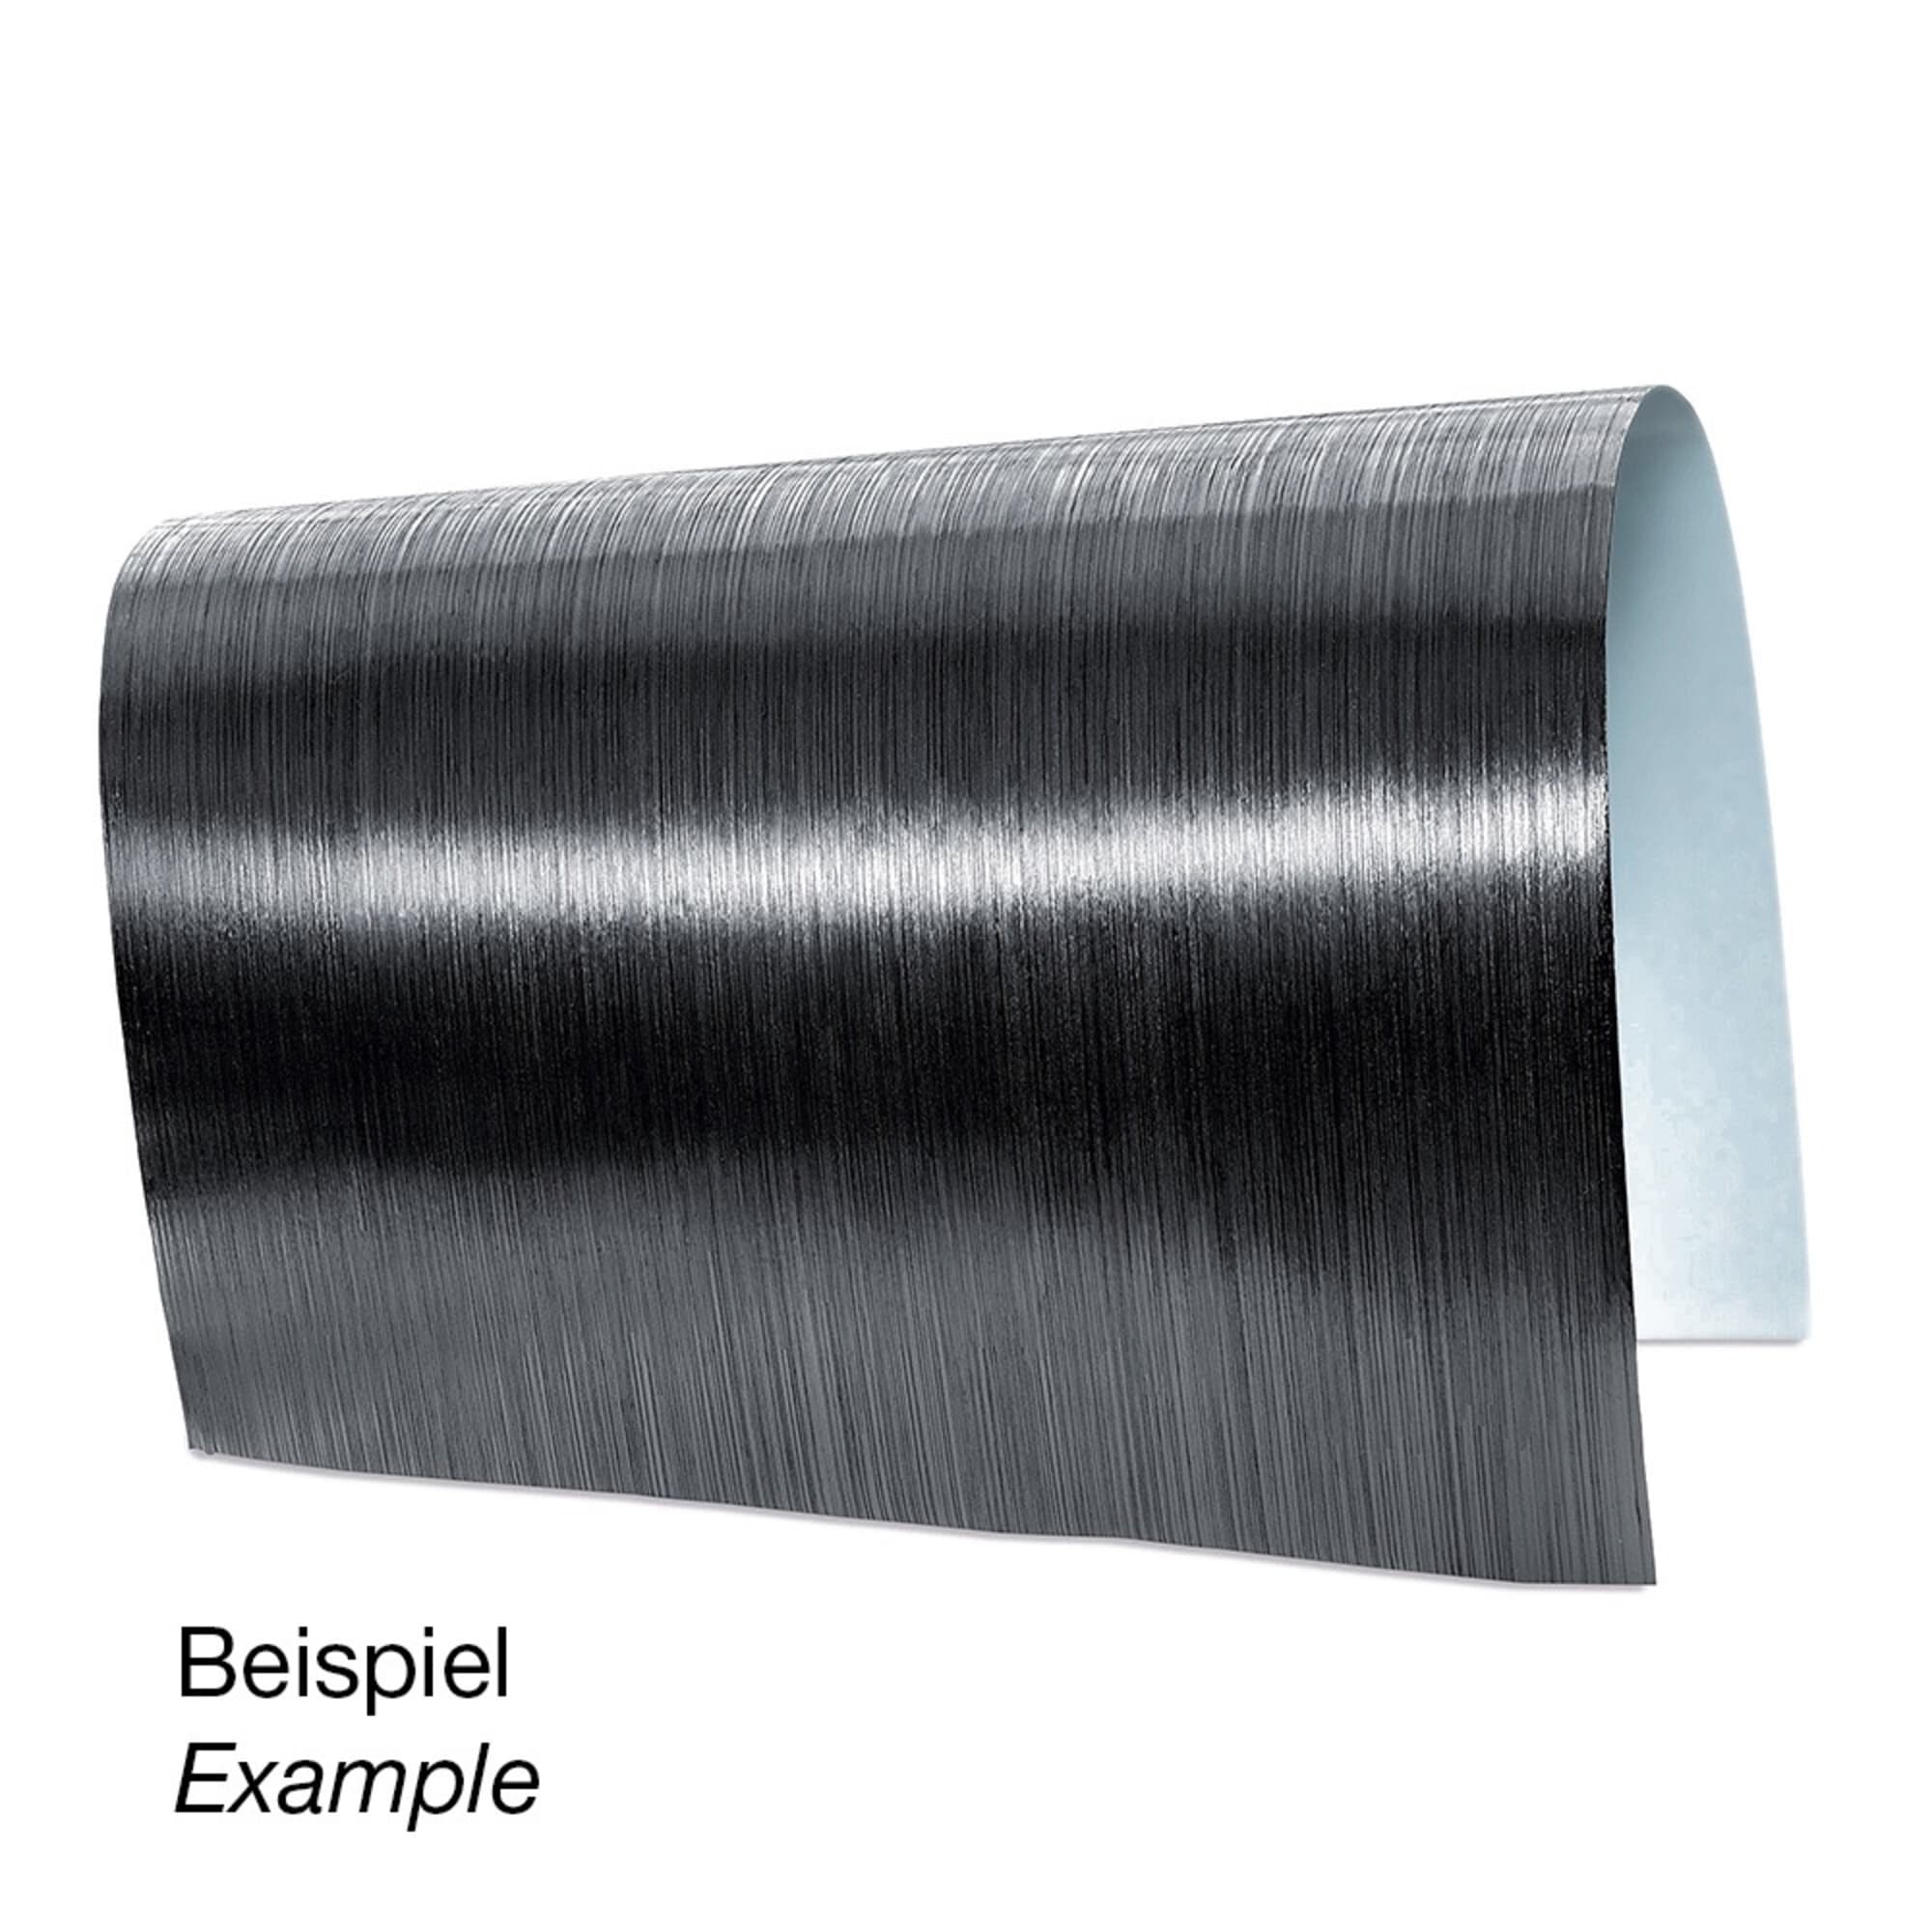 SIGRAPREG® UD Carbon non-crimp fabric prepreg U230, 60 cm, image 2